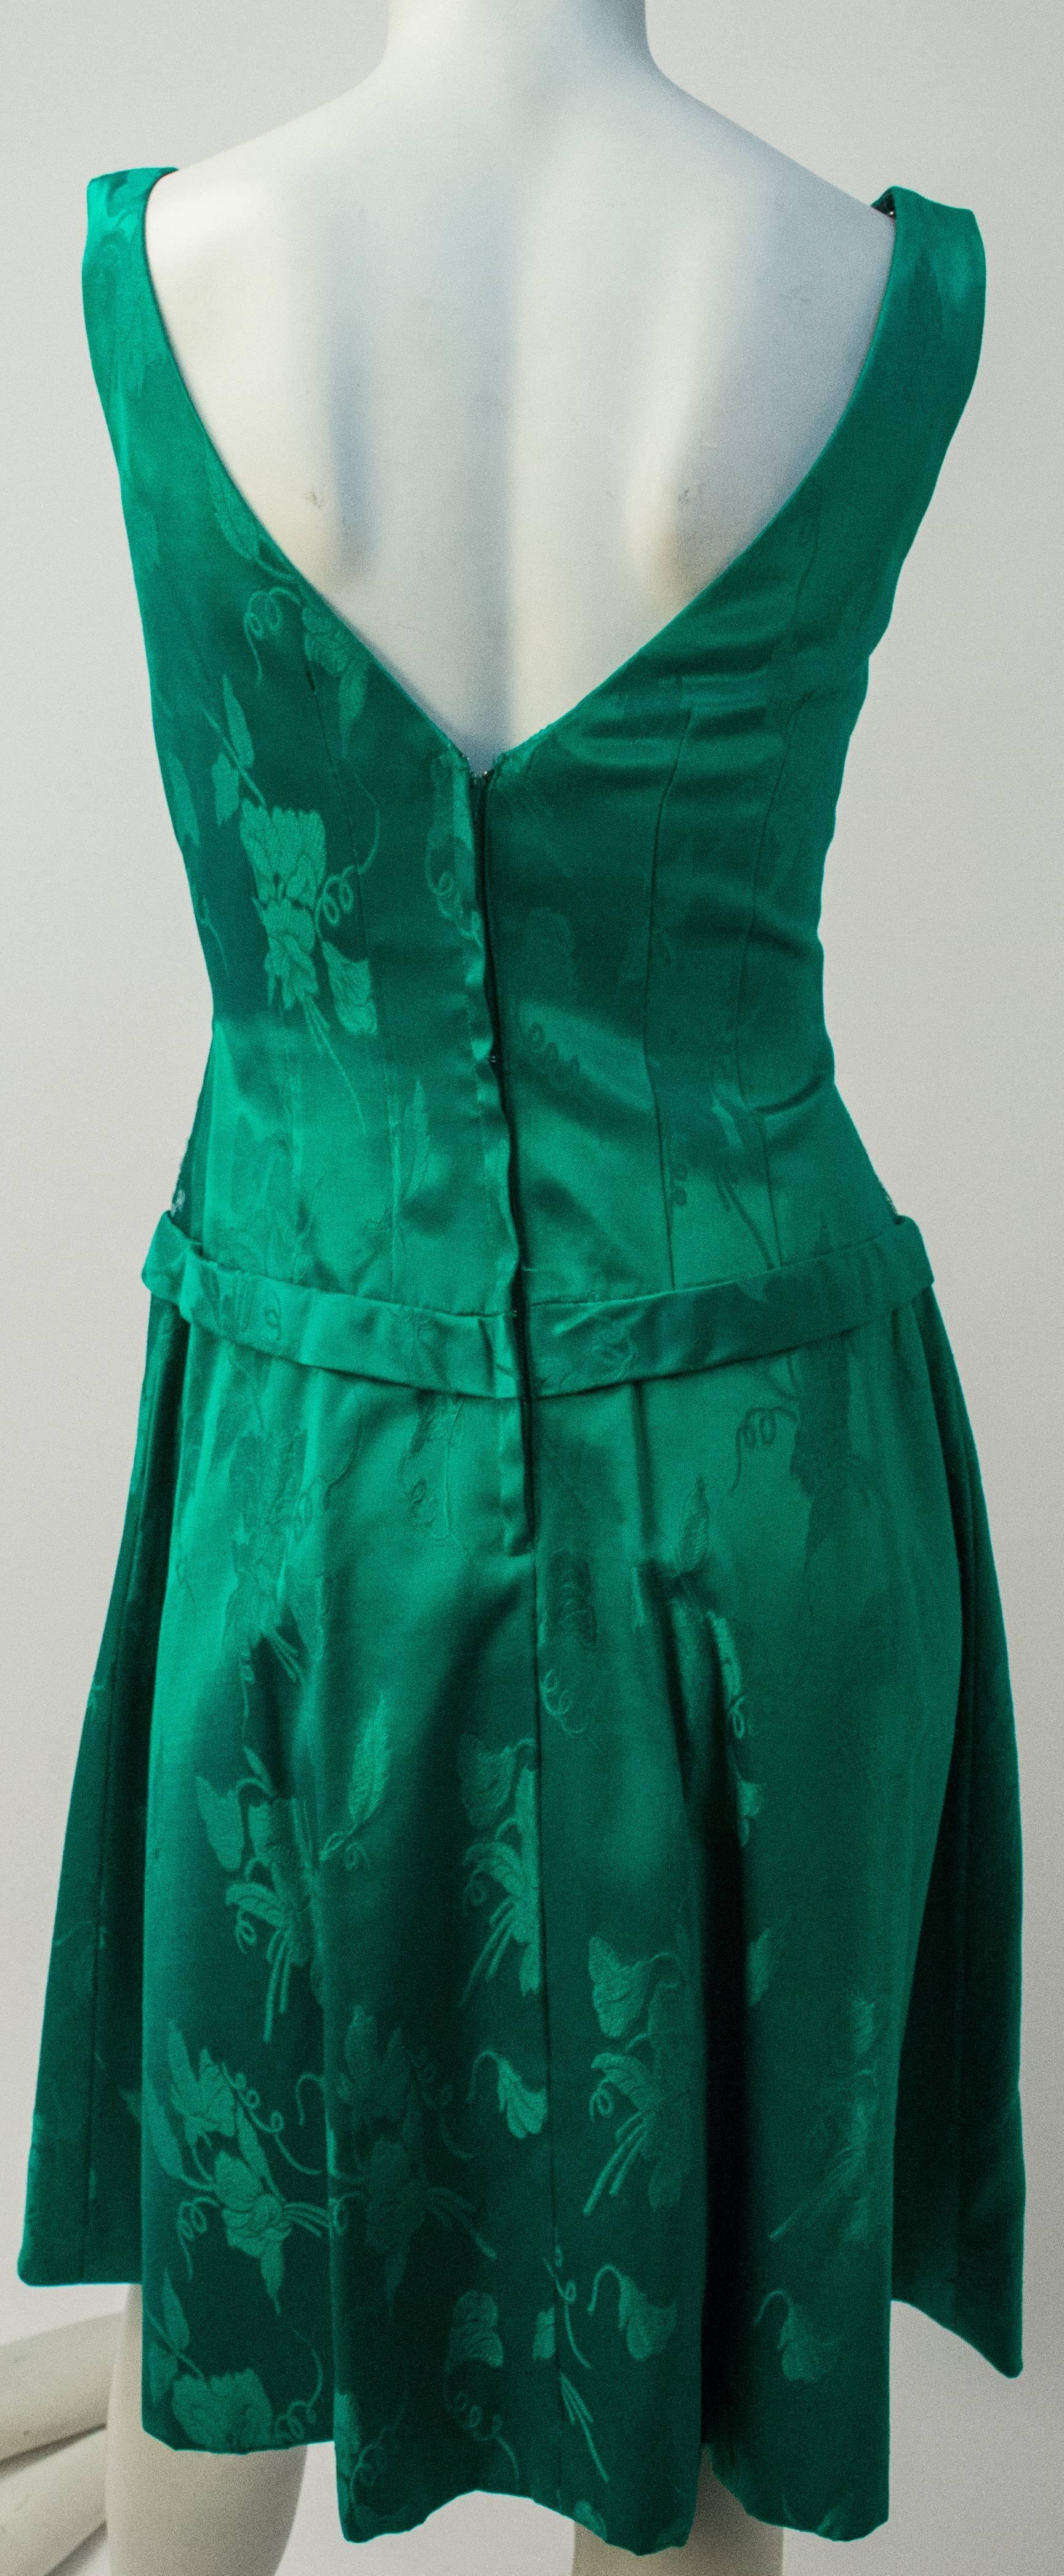 60s green dress